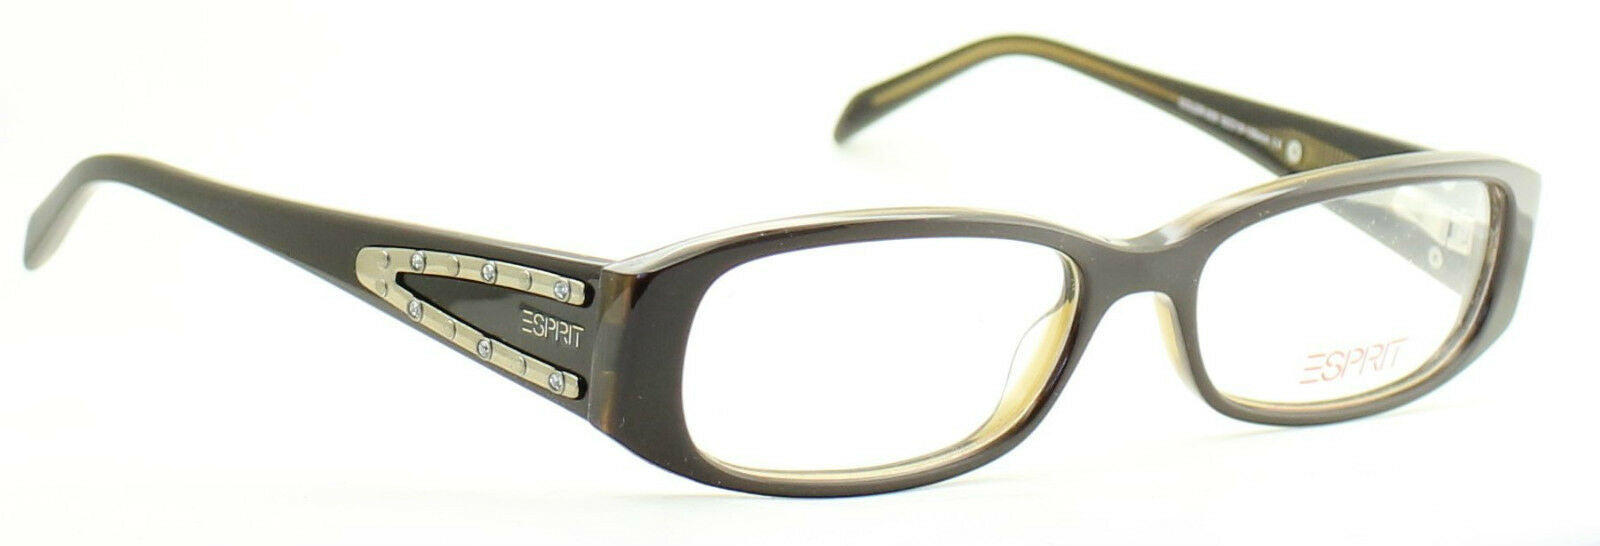 ESPRIT ET9373 col. 535 Eyewear FRAMES NEW Glasses RX Optical Eyeglasses - BNIB